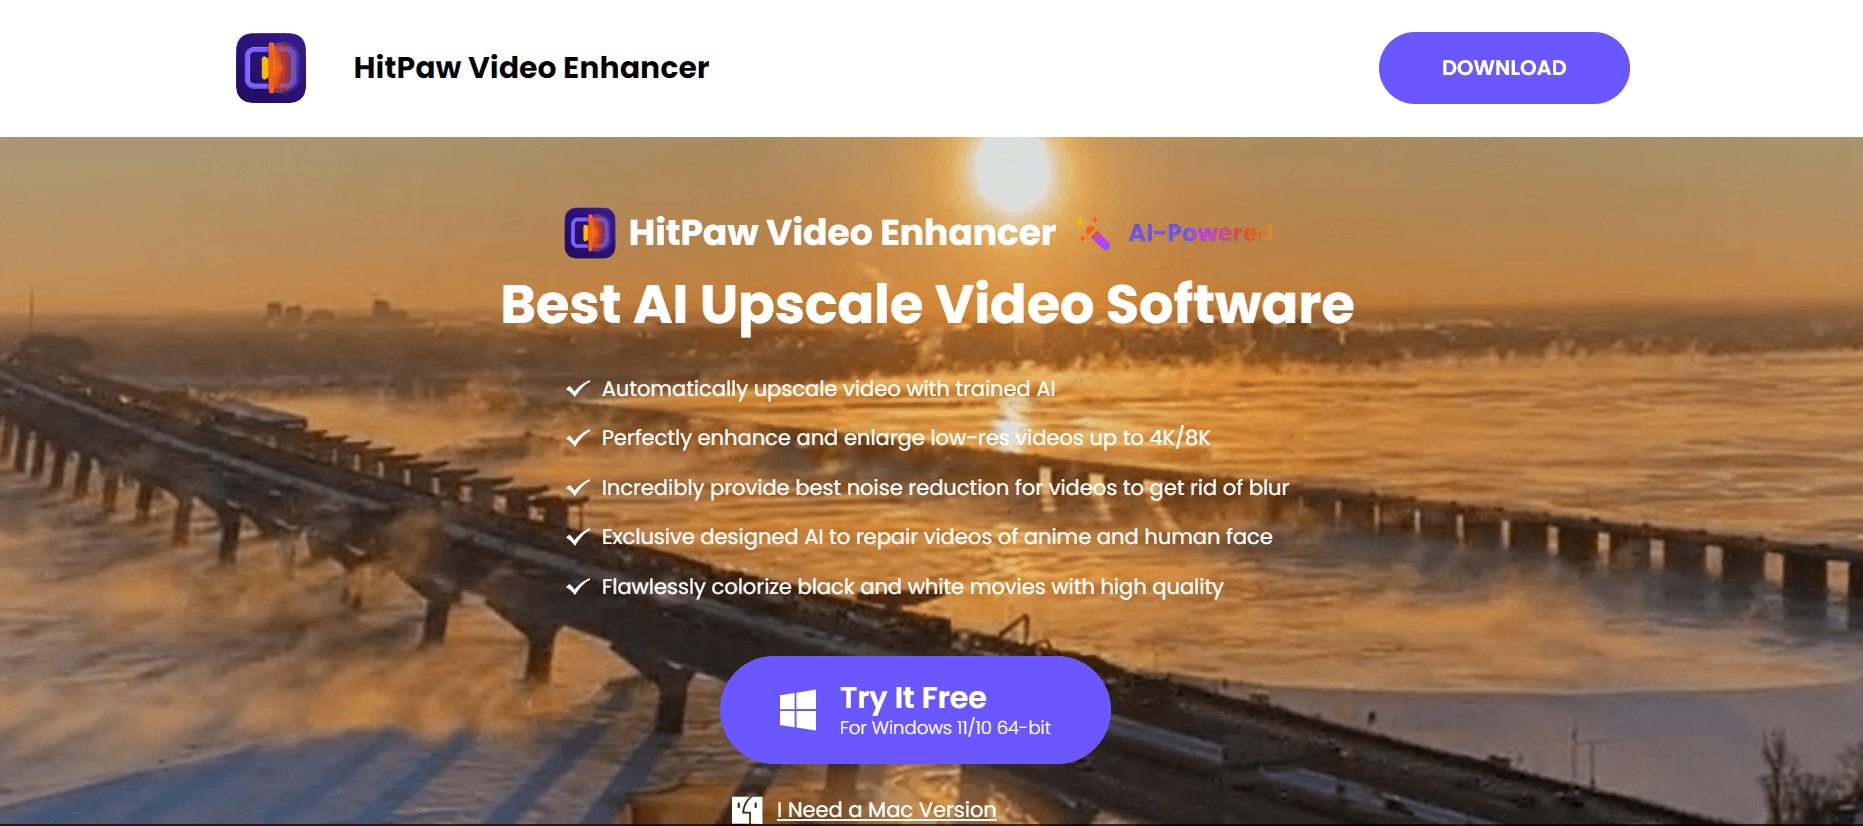 HitPaw AI Video Enhancer - Comprehensive Video Quality Enhancement and Colorization